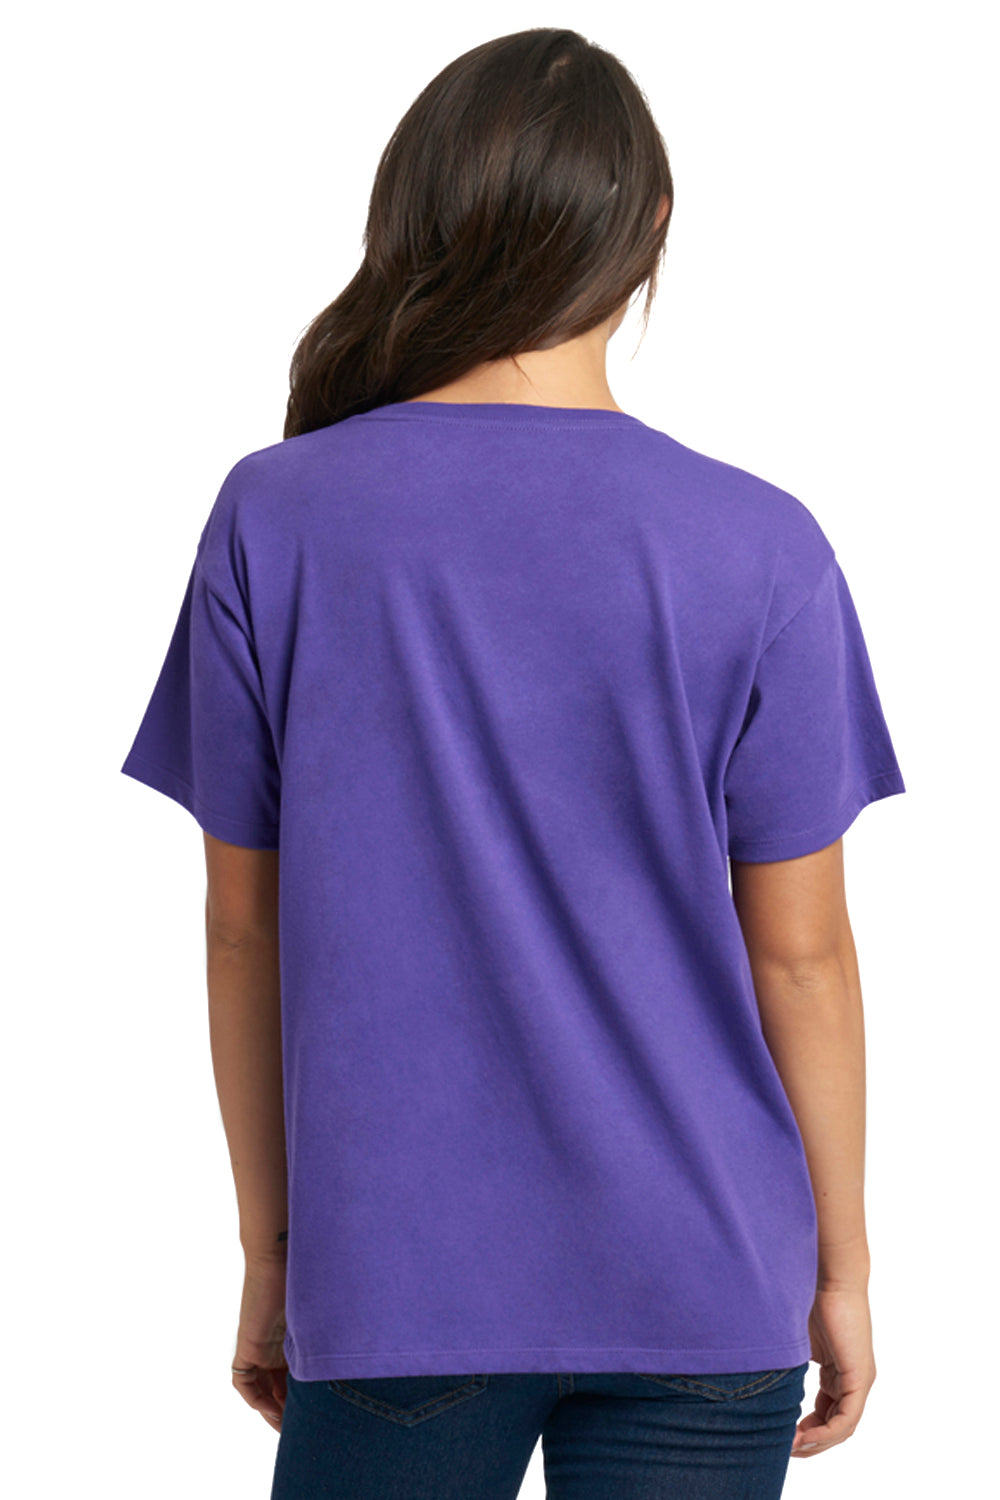 Next Level N1530 Womens Ideal Flow Short Sleeve Crewneck T-Shirt Purple Rush Back